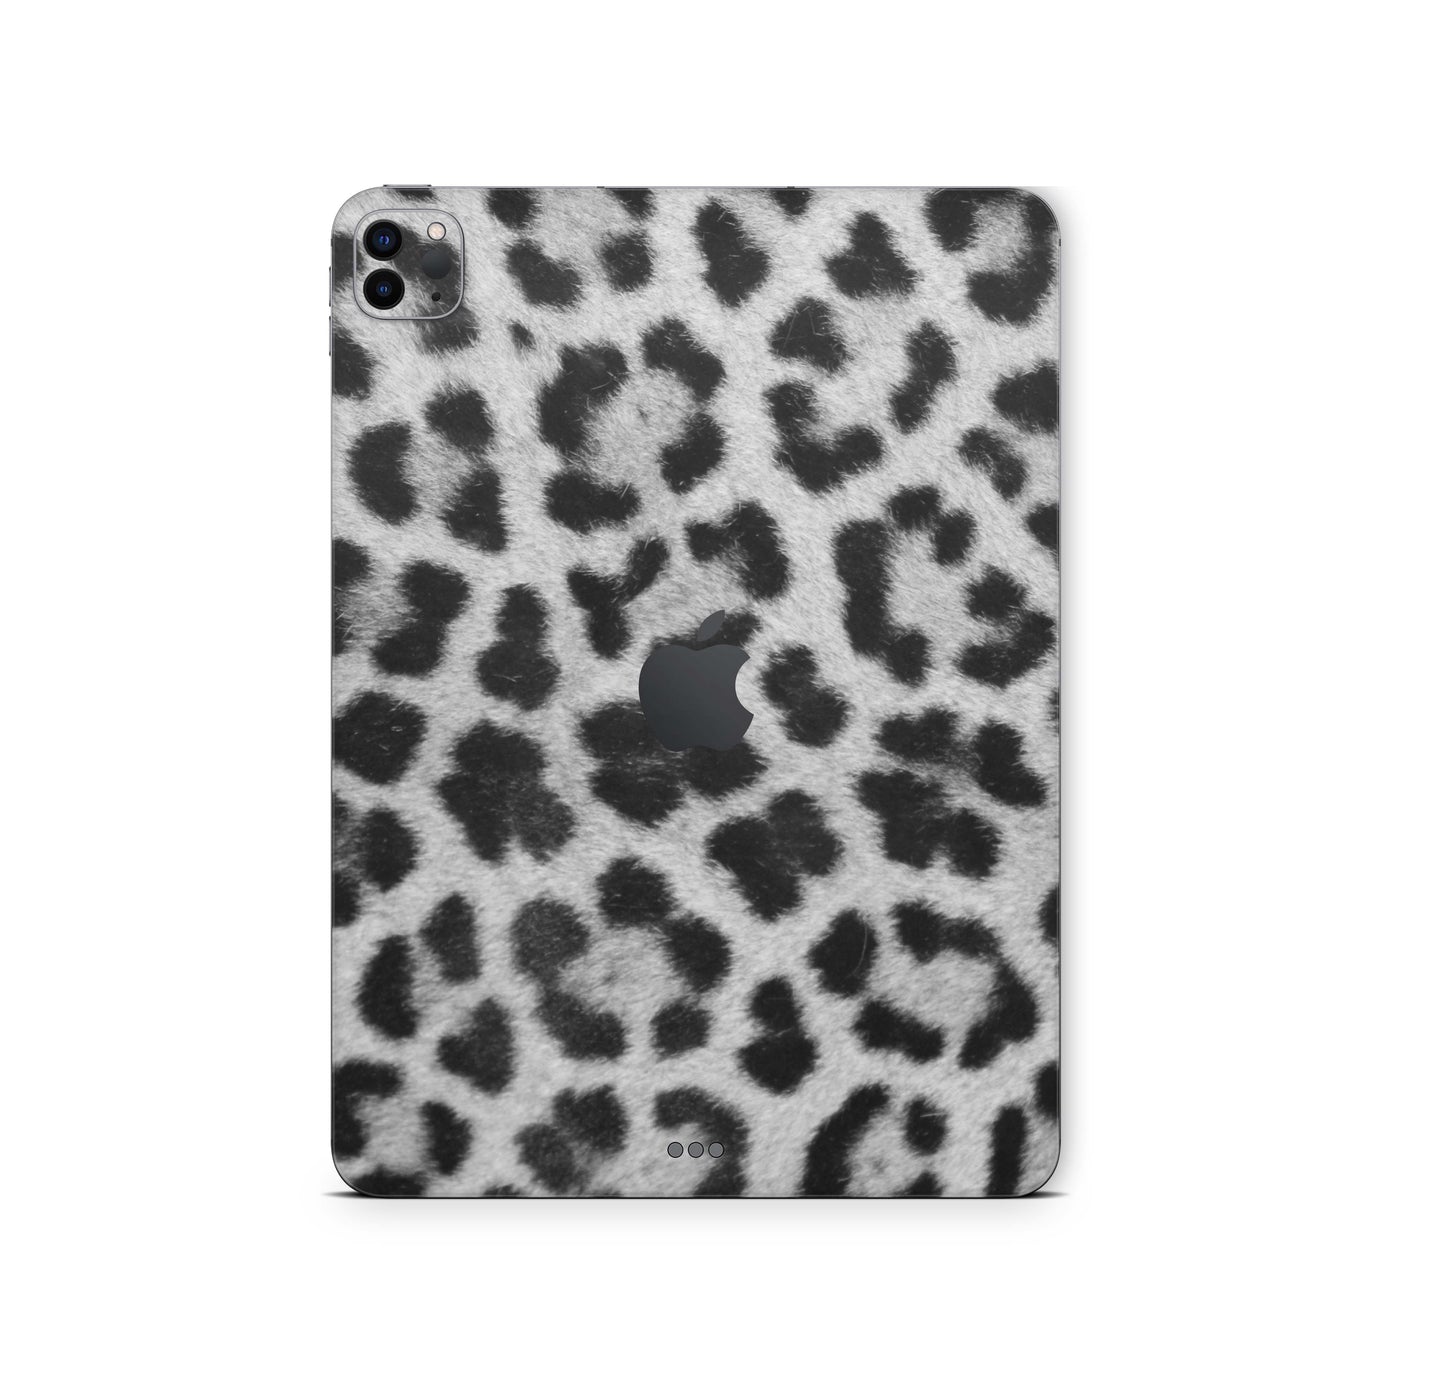 iPad Pro Skin 12,9 3.Generation Design Cover Folie Vinyl Skins & Wraps Aufkleber Skins4u Leopard-grau  